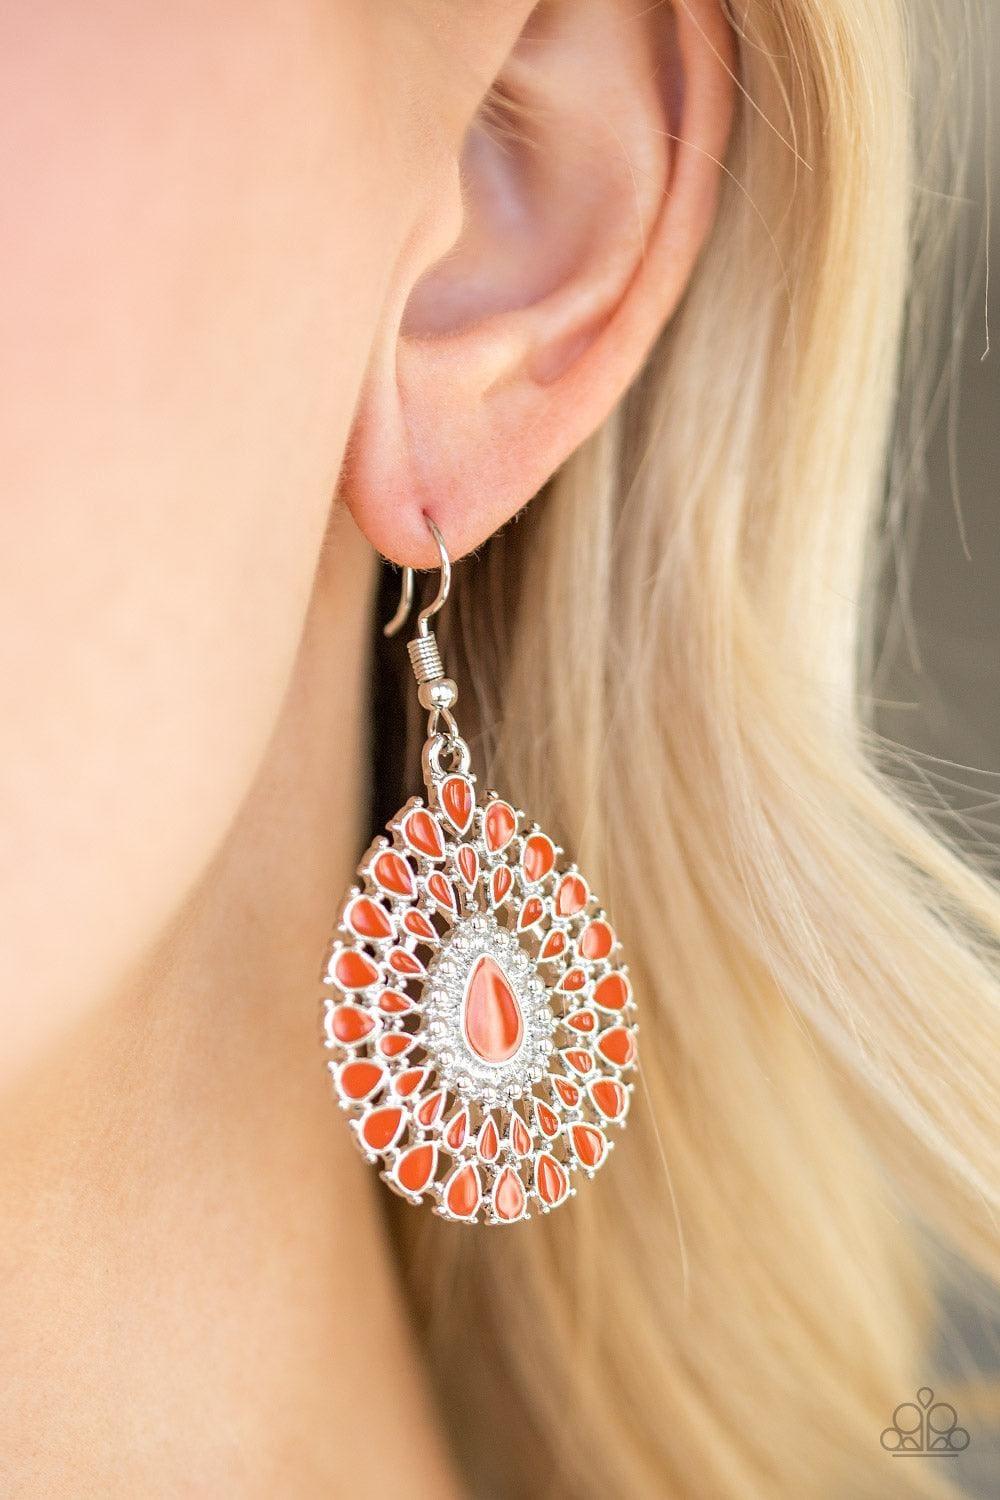 Paparazzi Accessories - City Chateau - Orange Earrings - Bling by JessieK